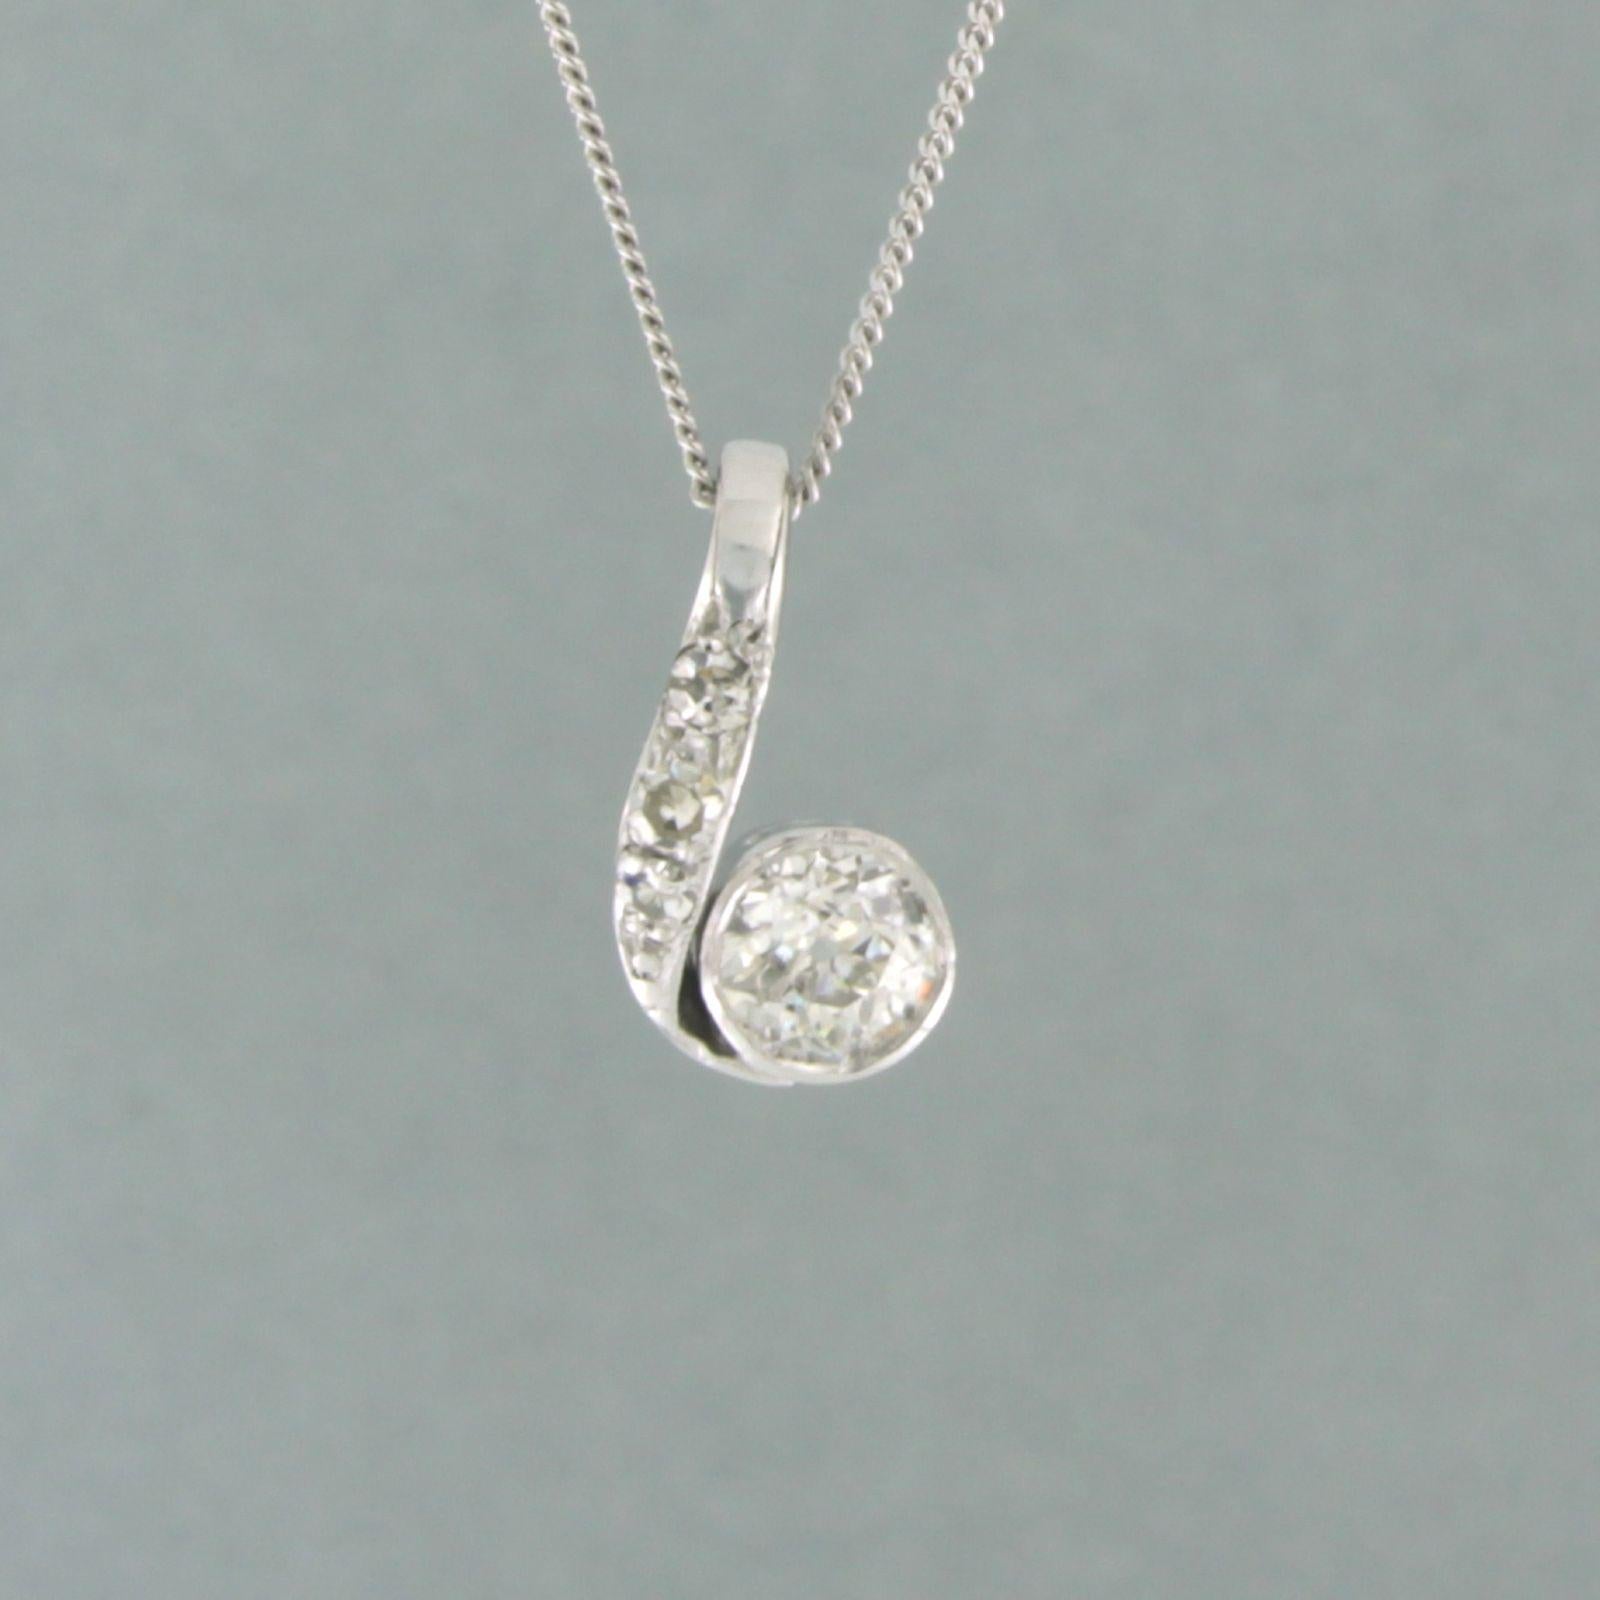 Women's Necklace with Art Nouvea pendant set with diamonds 14k white gold For Sale